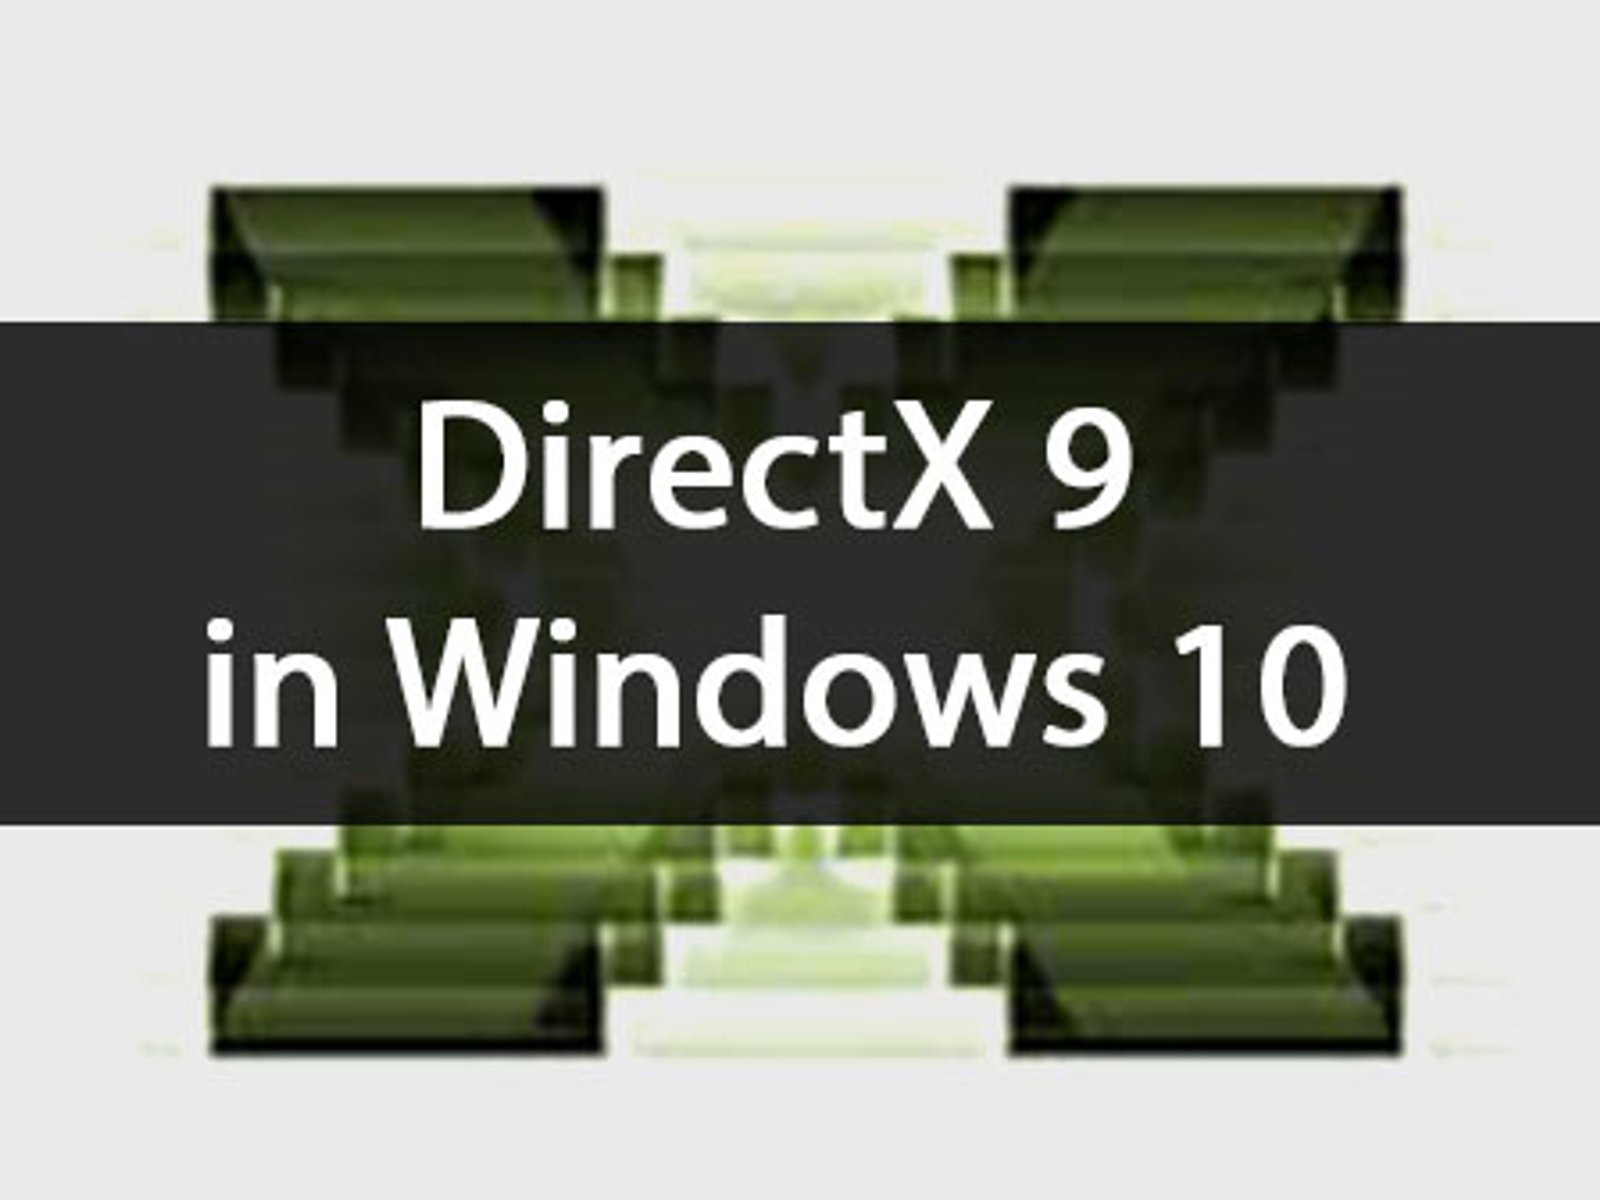 directx 9/10